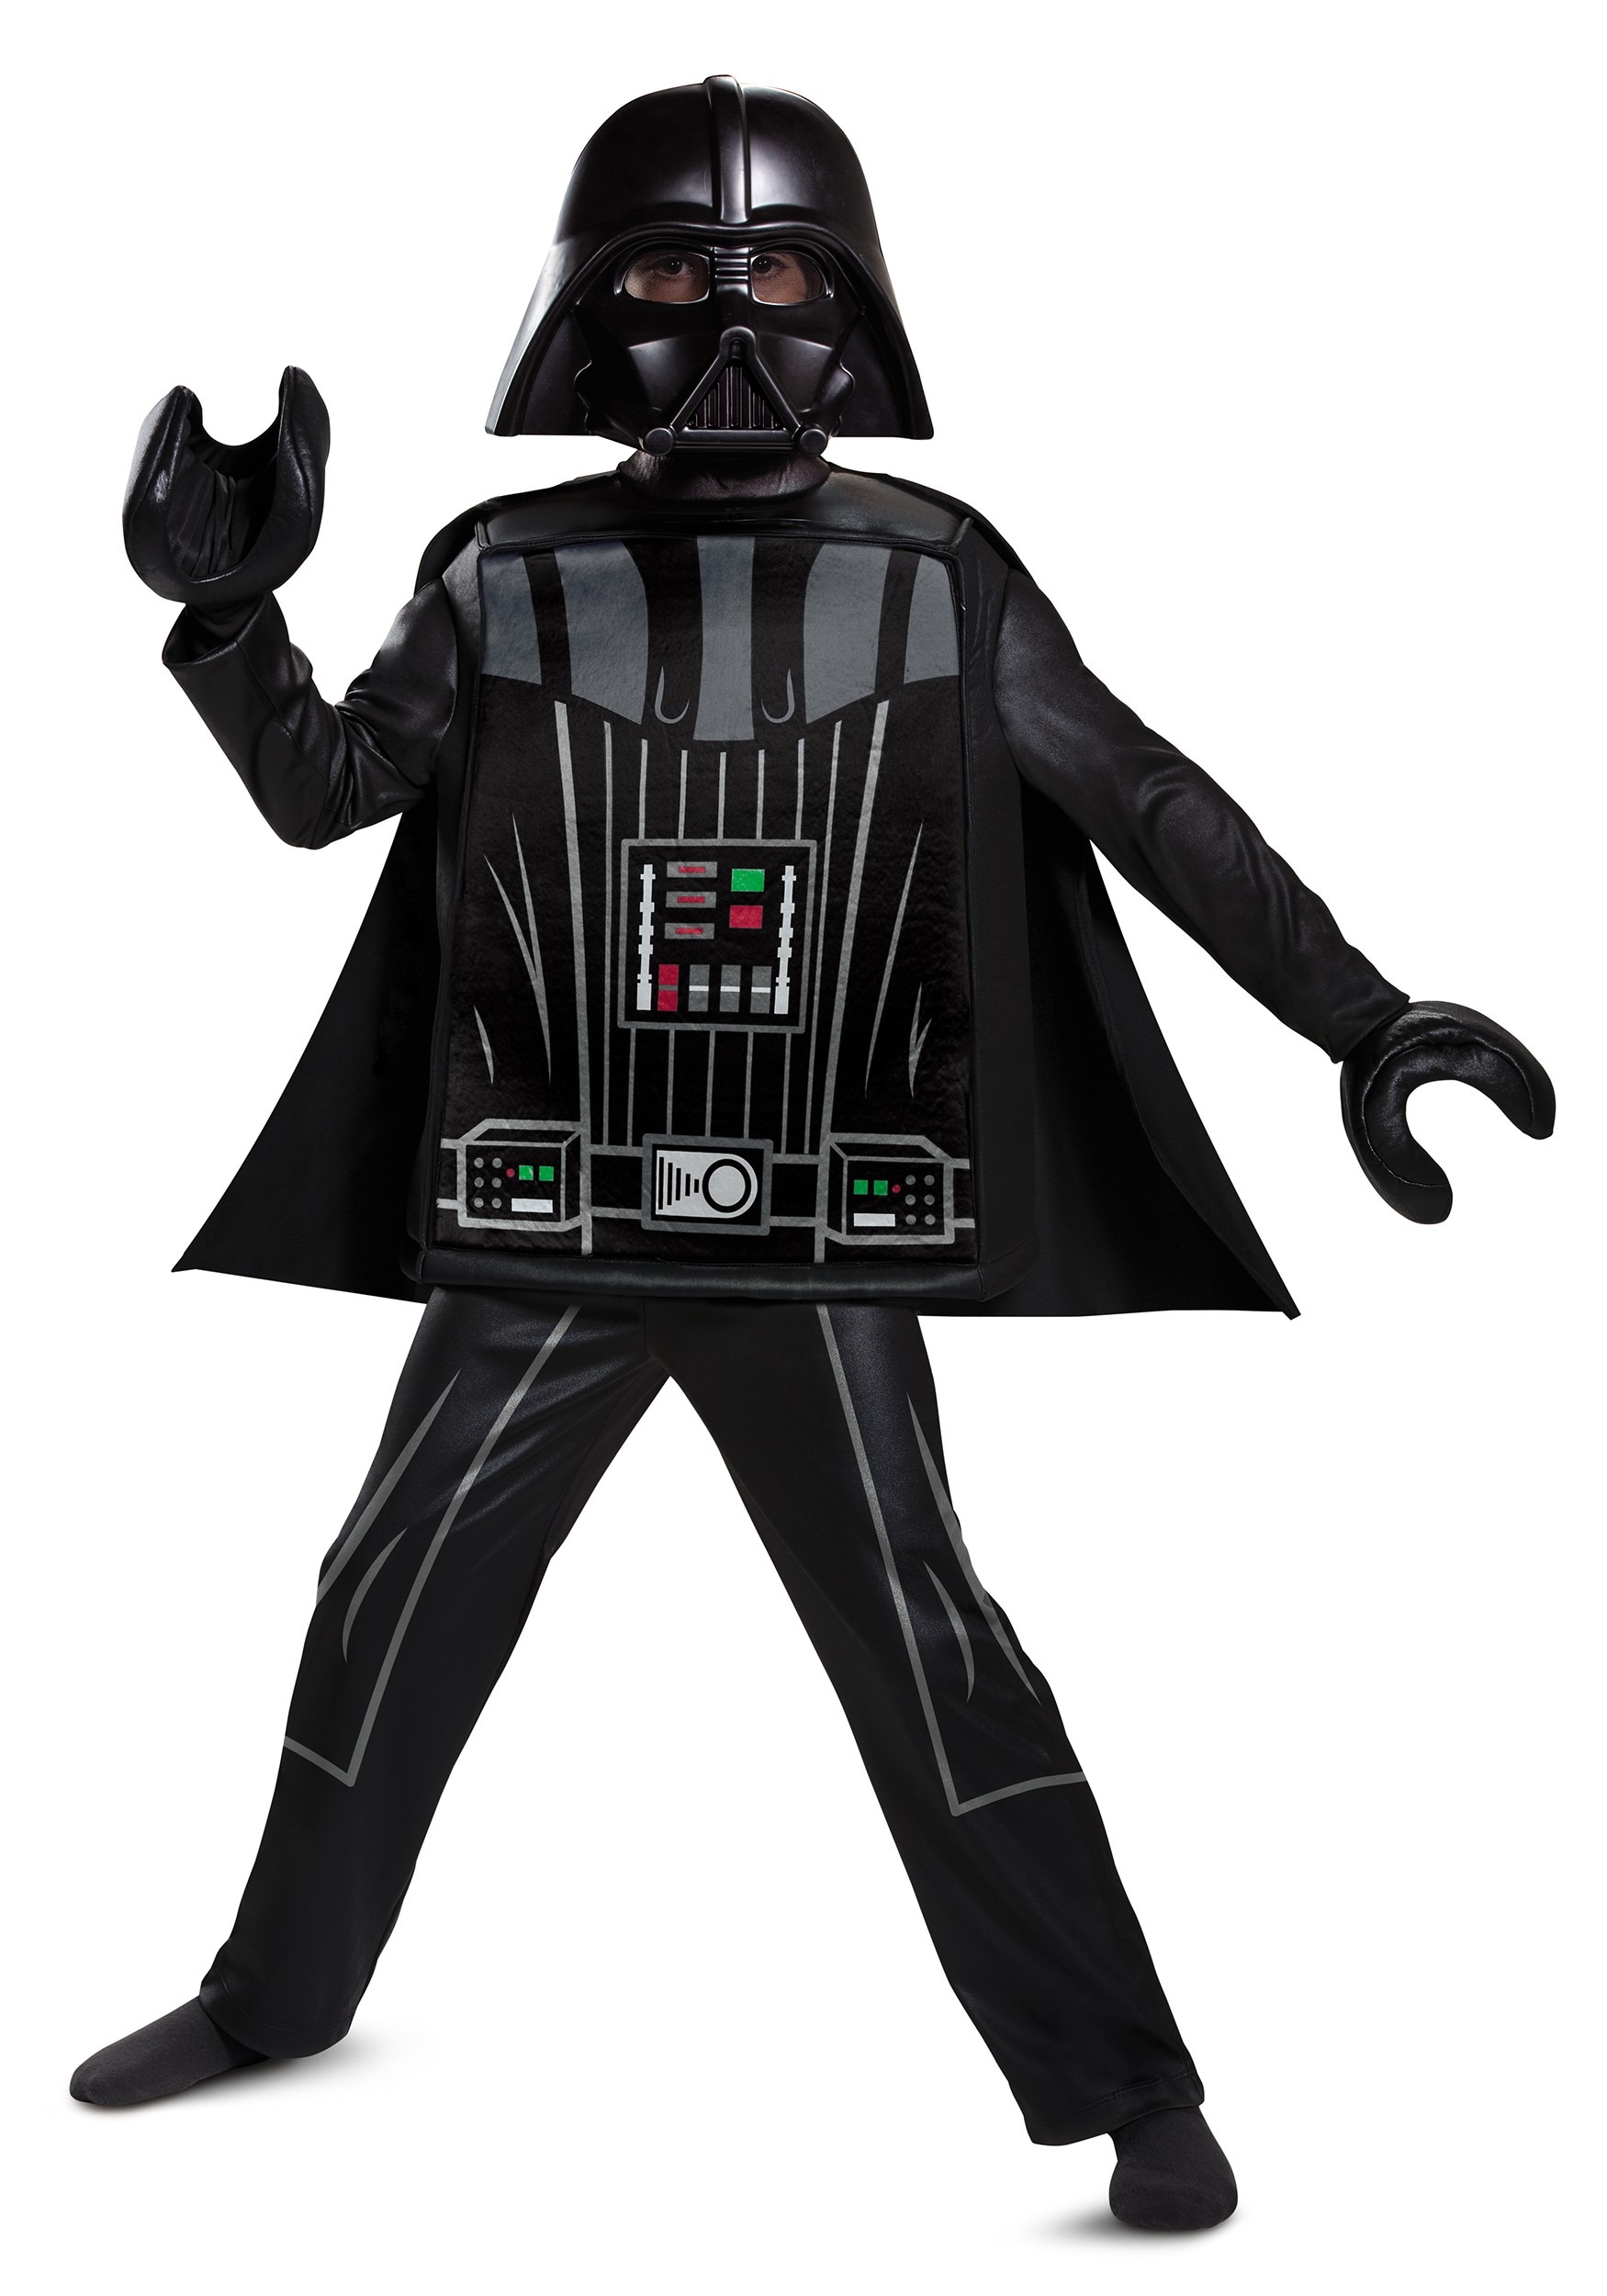 Boy’s Deluxe Lego Darth Vader Costume – Lego Star Wars